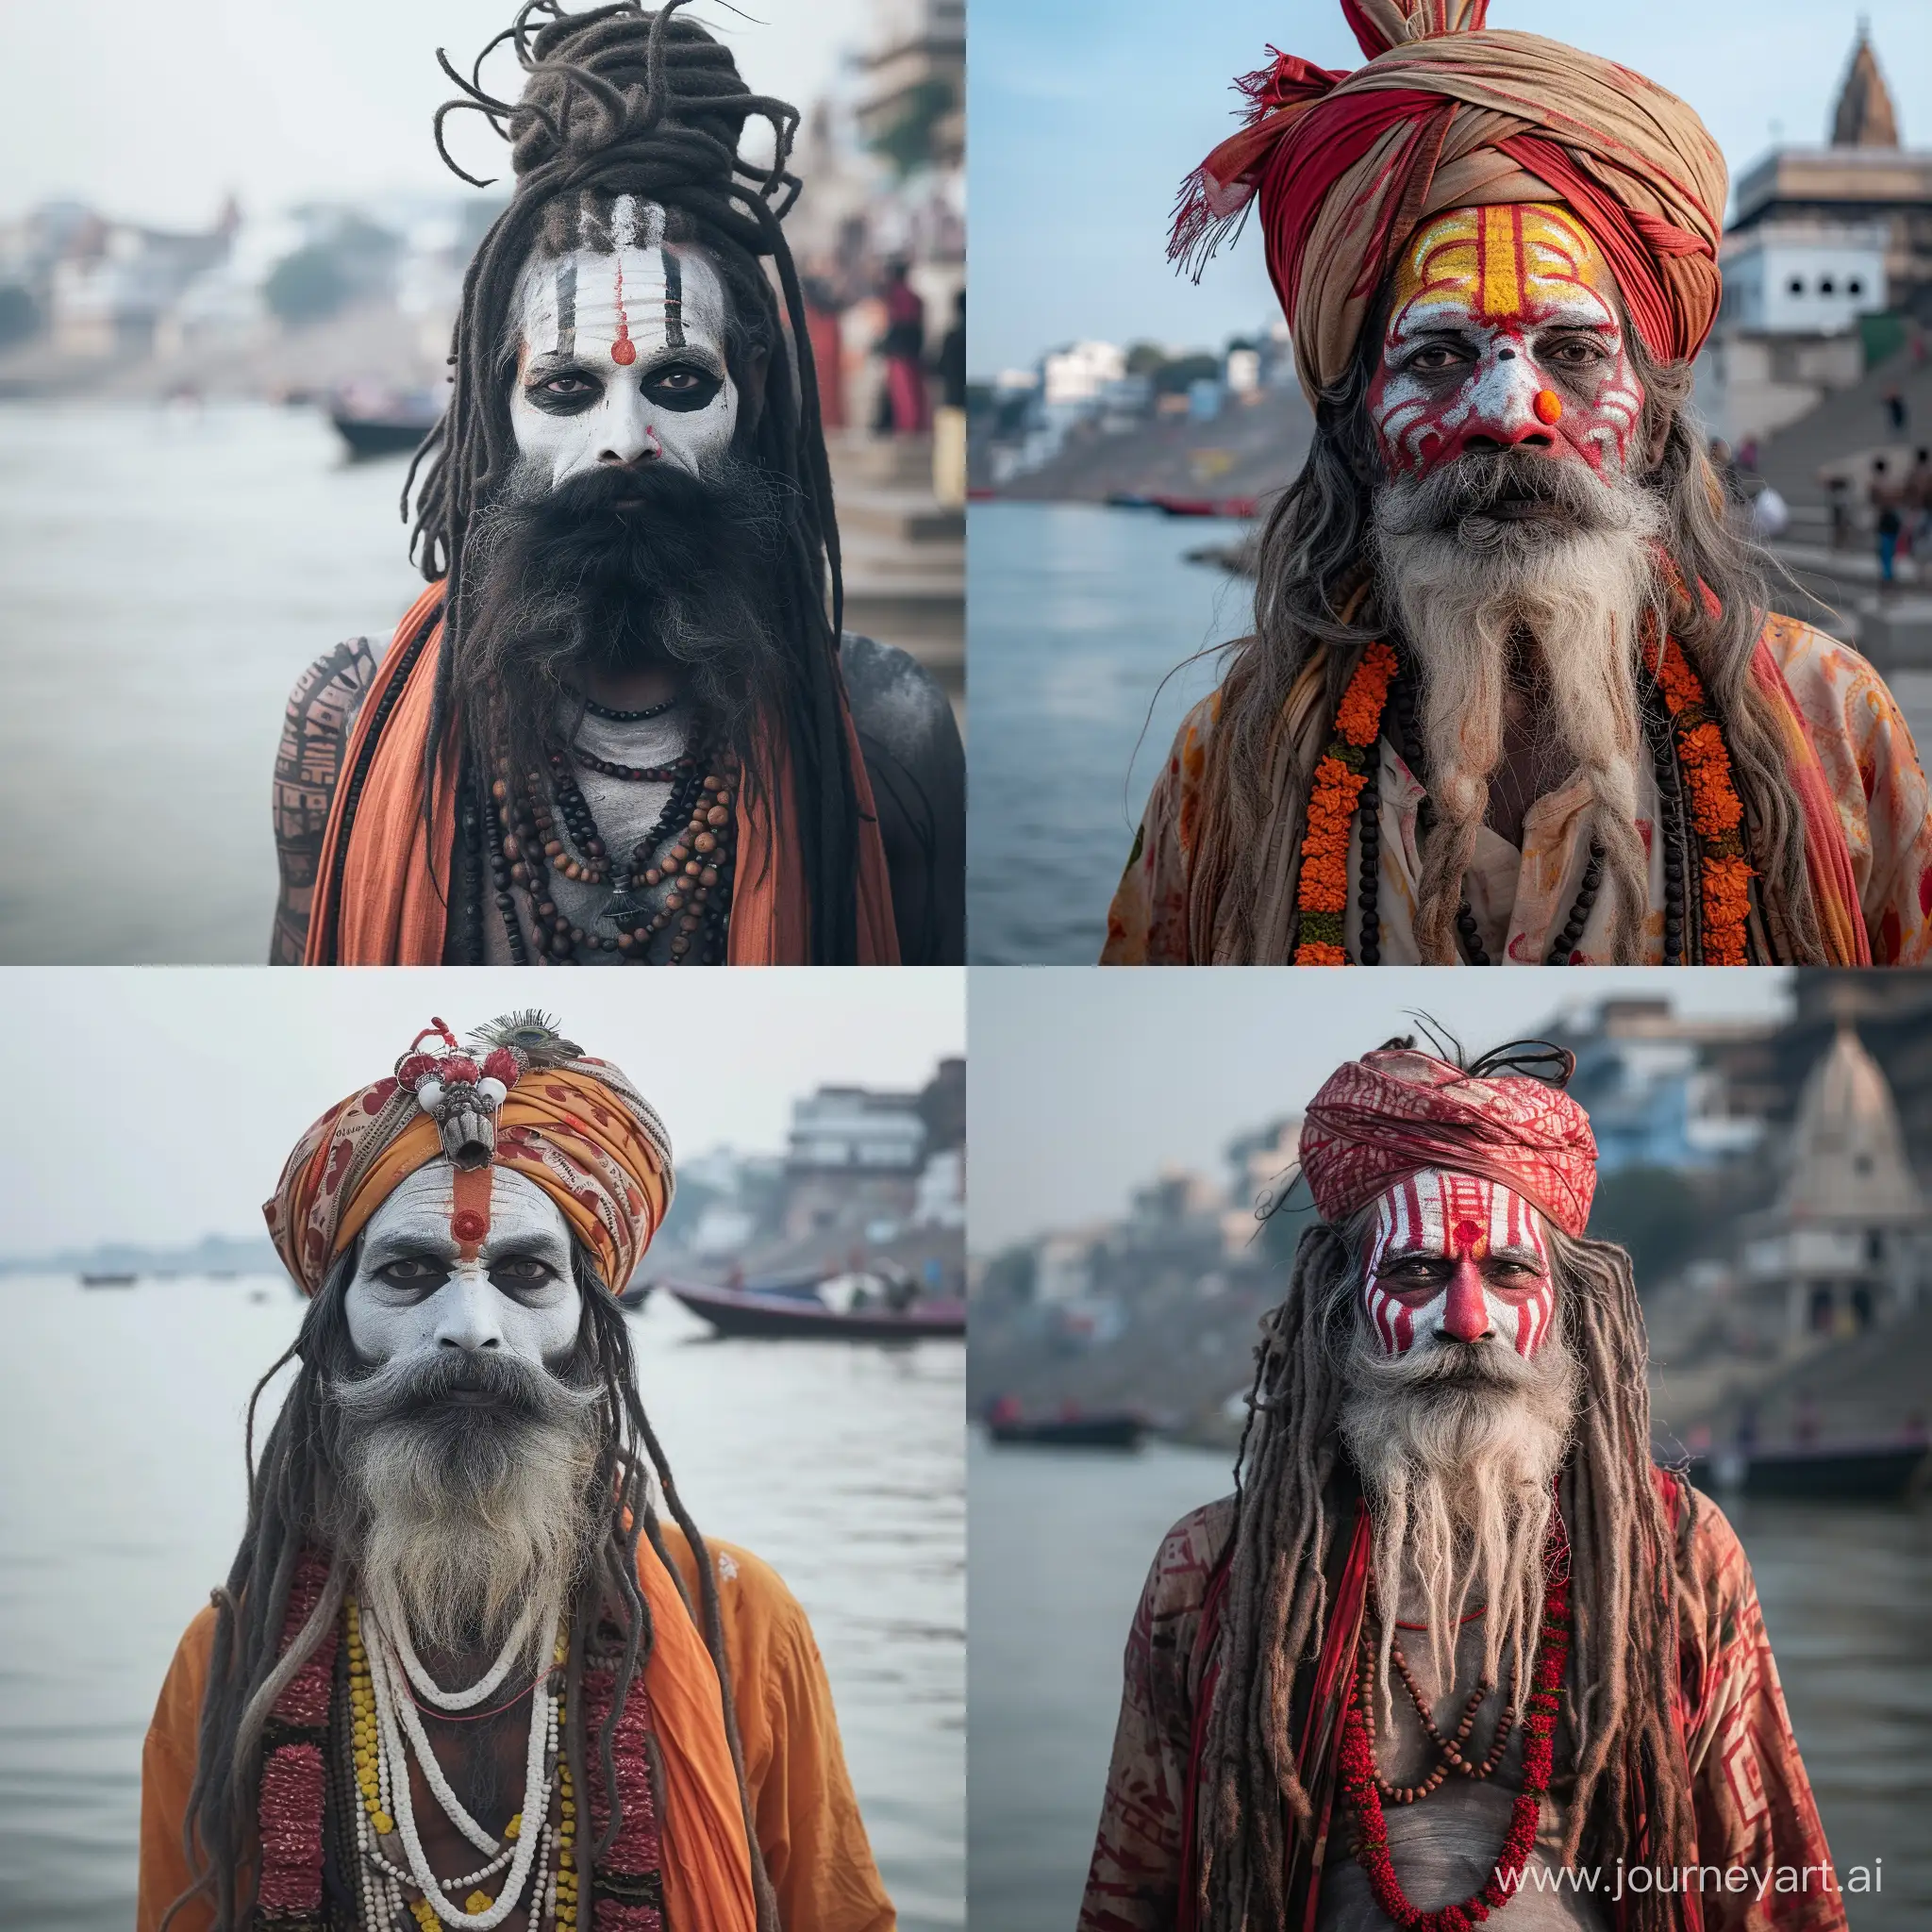 Naga-Sadhu-Portrait-at-Ganges-in-Varanasi-Fotorealistic-50mm-Lens-Capture